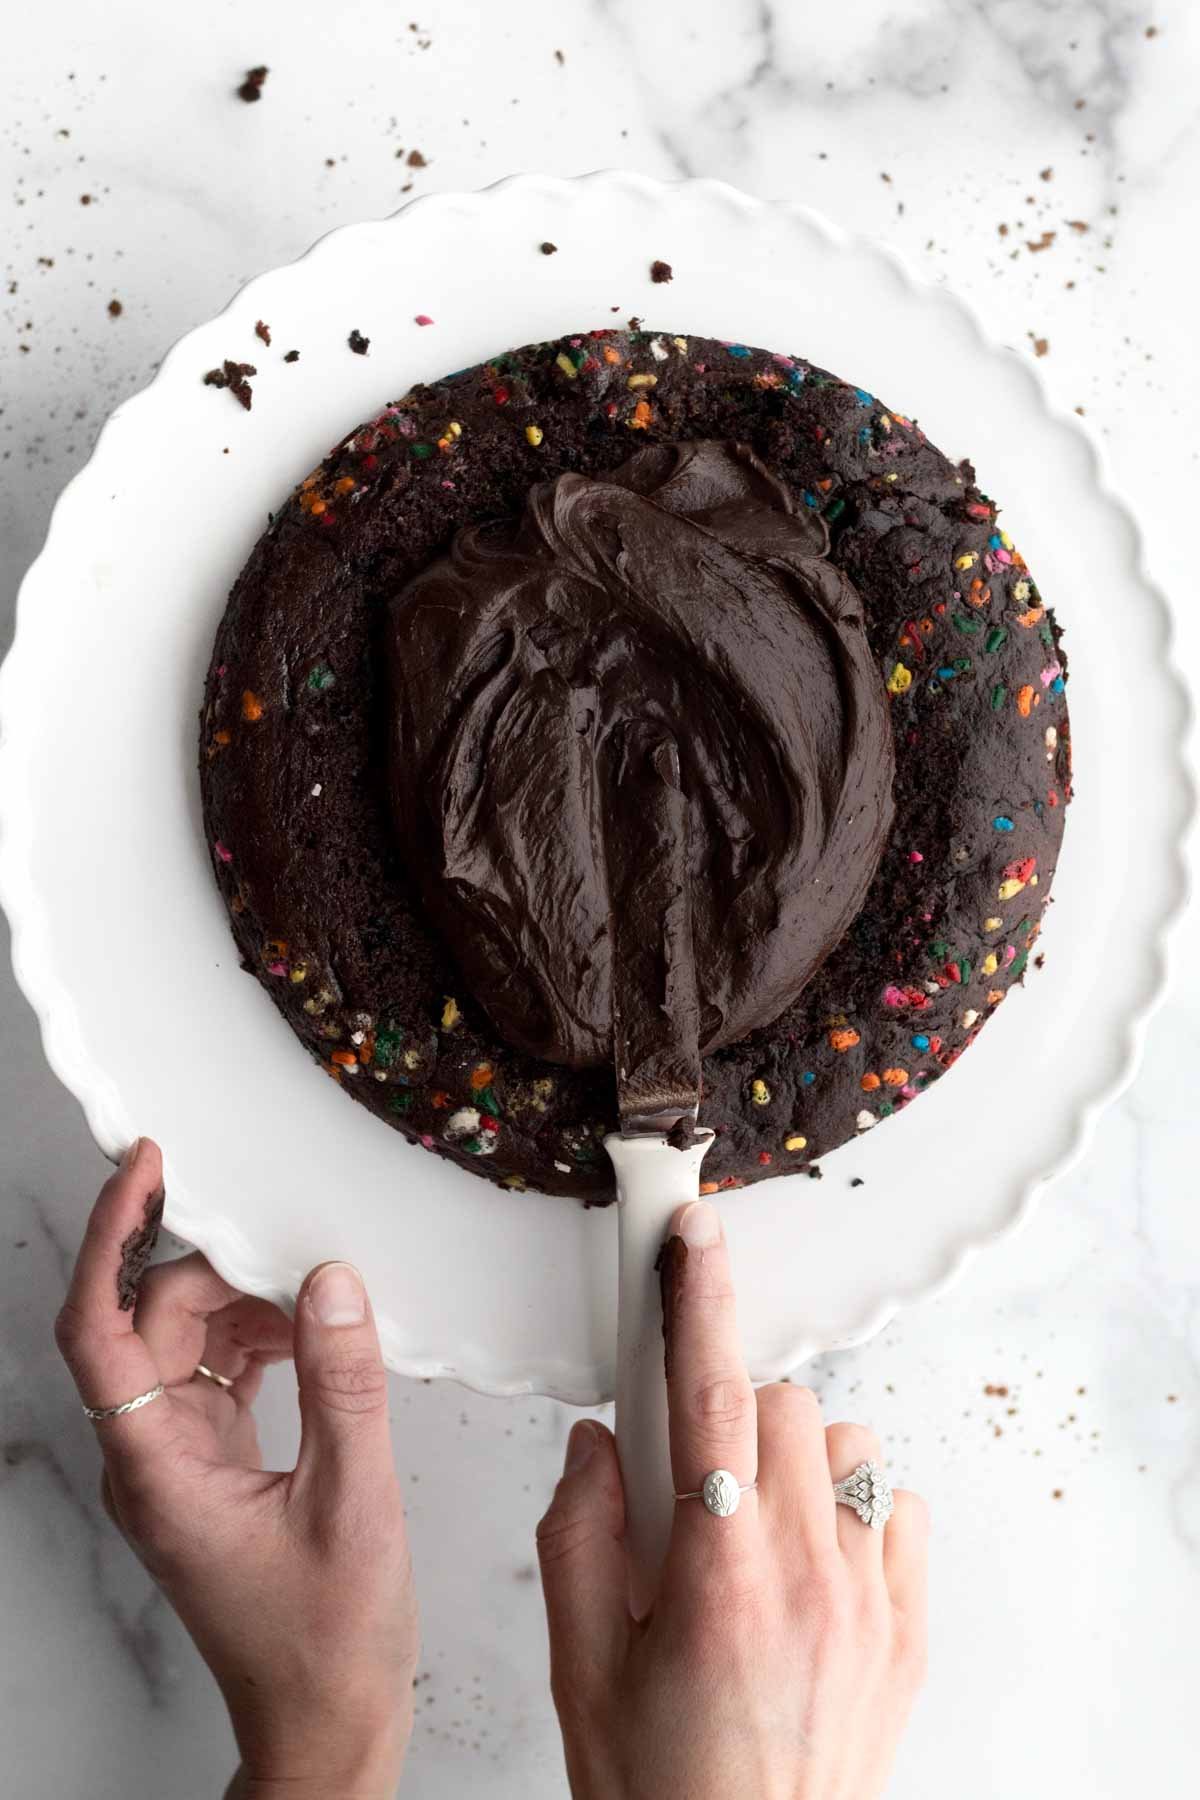 Spreading chocolate fudge frosting on a dark rainbow sprinkled cake.